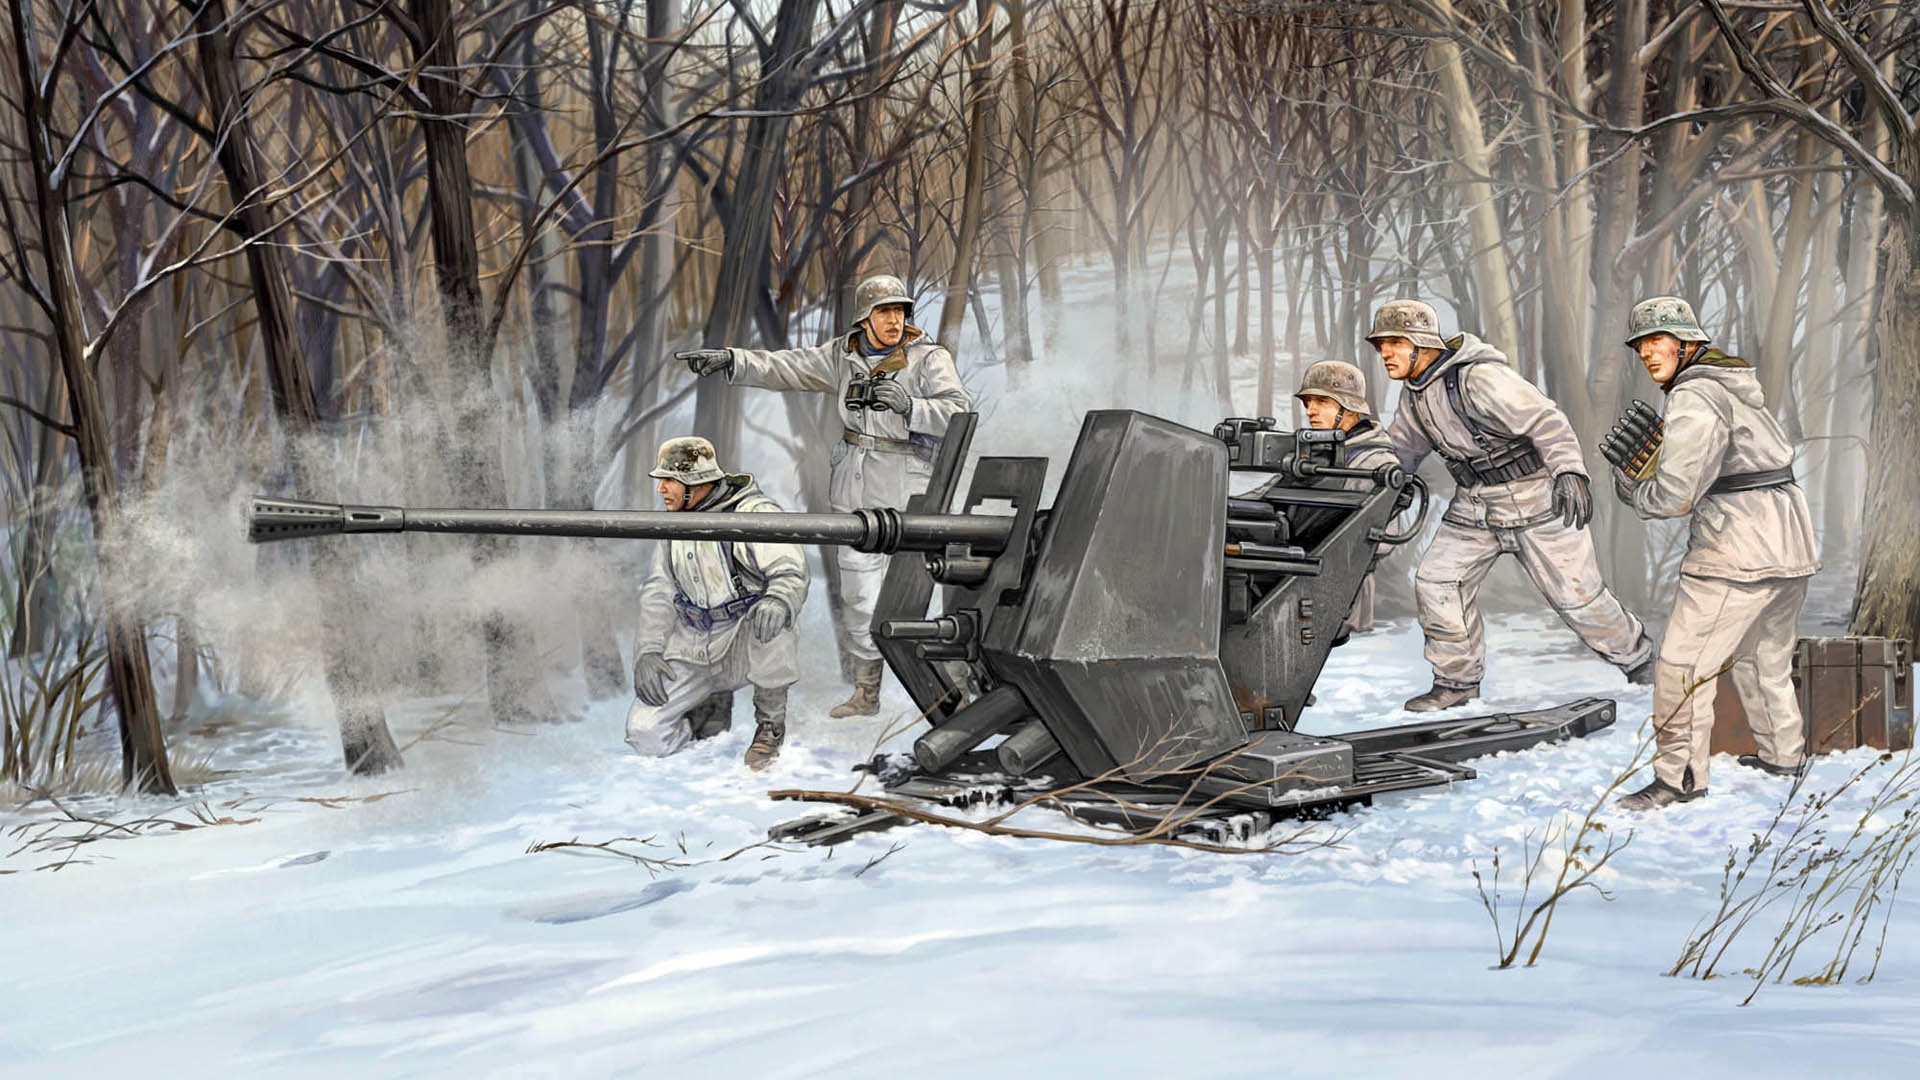 General 1920x1080 Wehrmacht military soldier weapon World War II winter artwork cannons snow Nazi